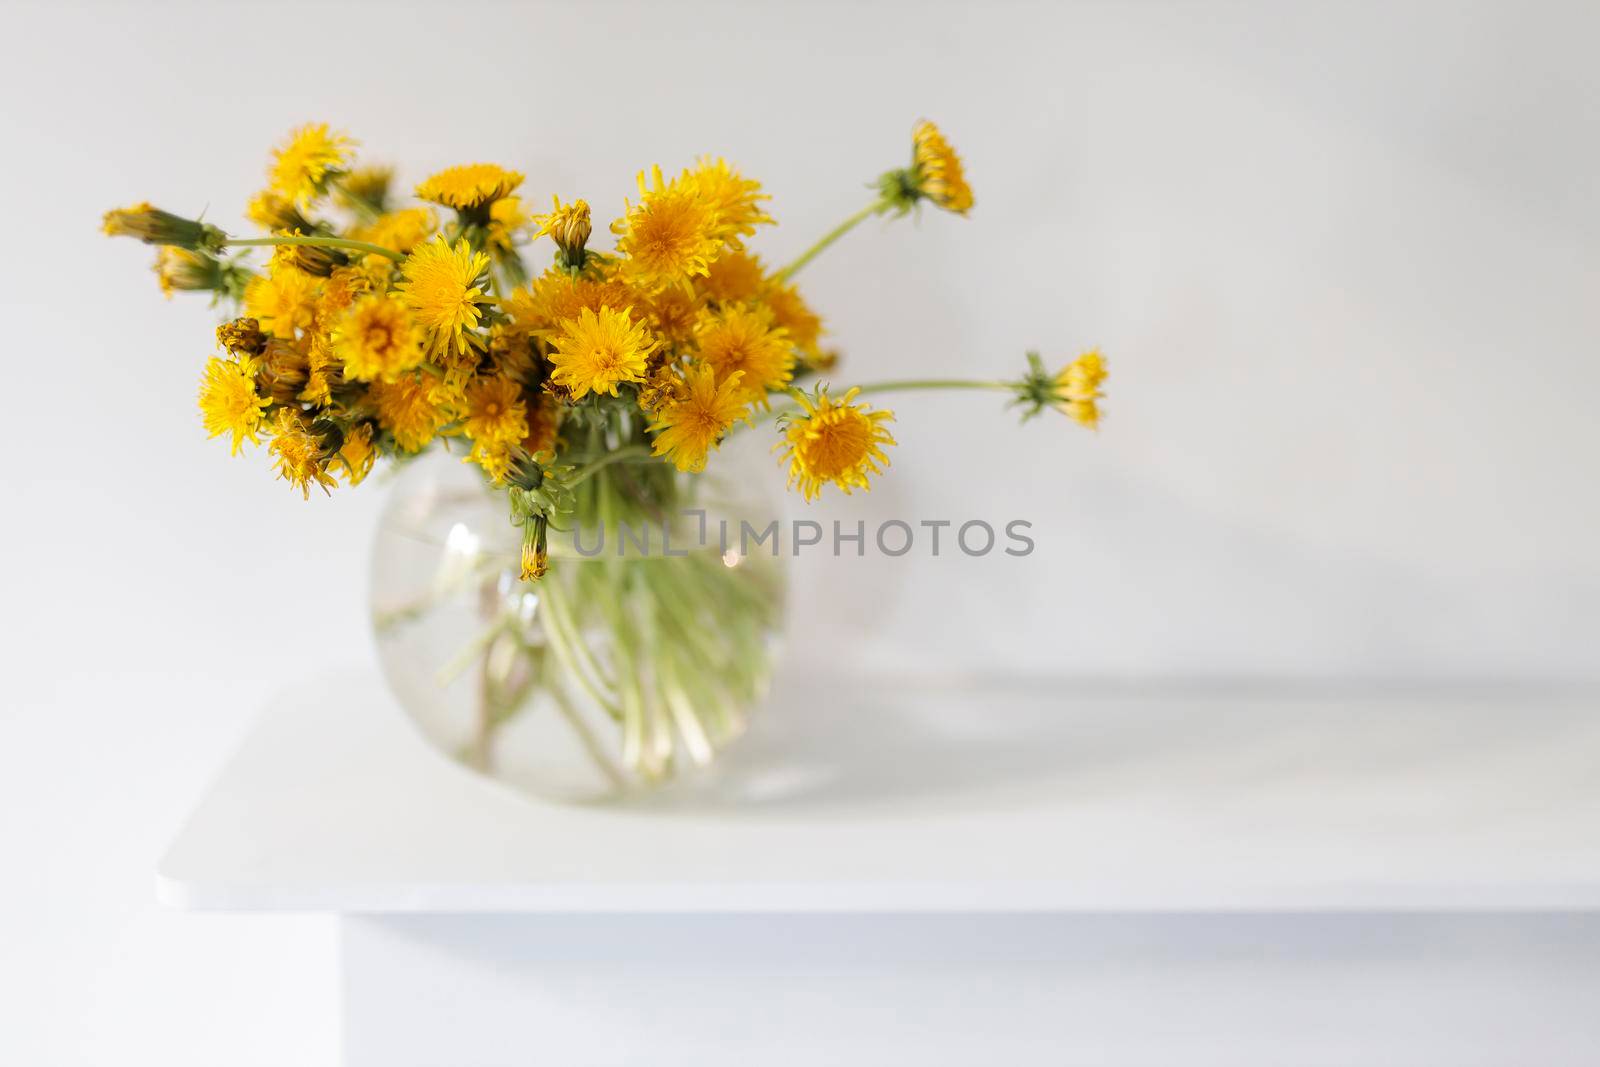 A bouquet of dandelions in a transparent glass vase. Copy space